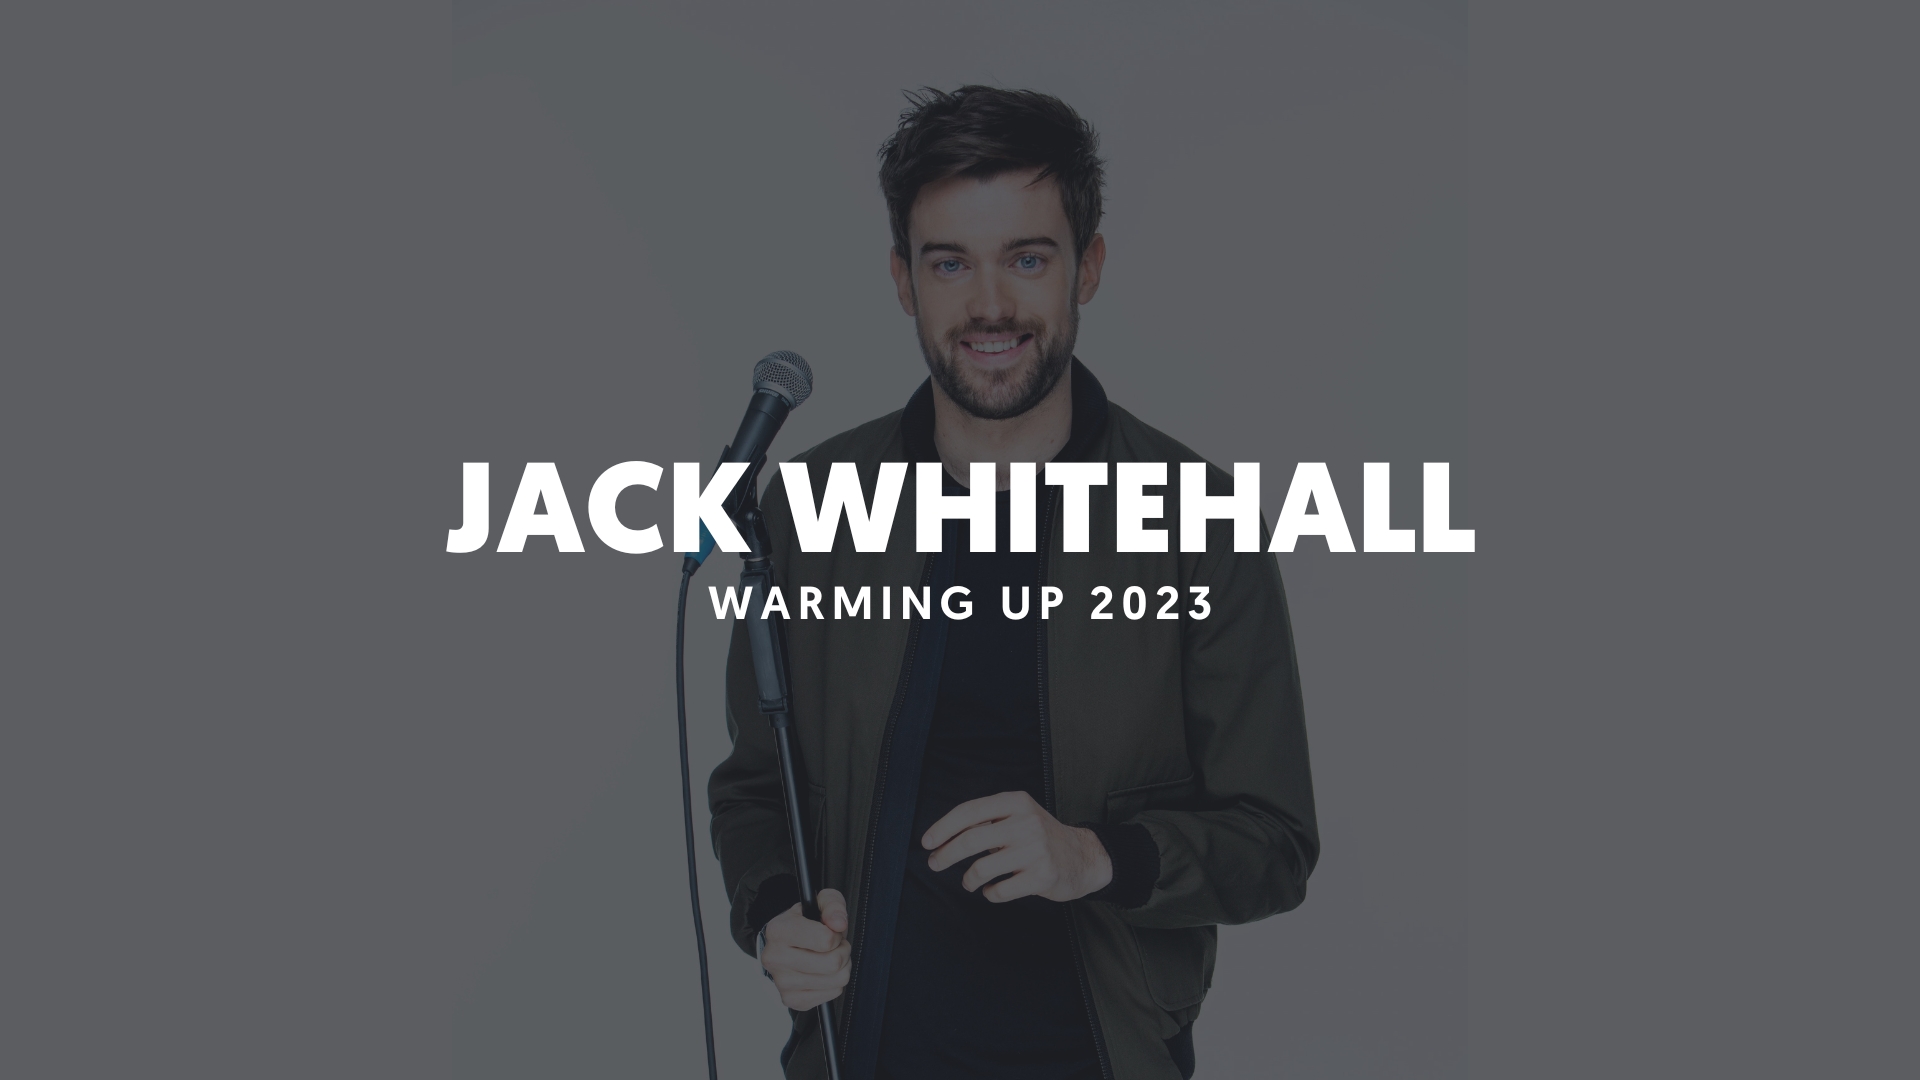 Jack Whitehall to visit The Bonus Arena, Hull next month